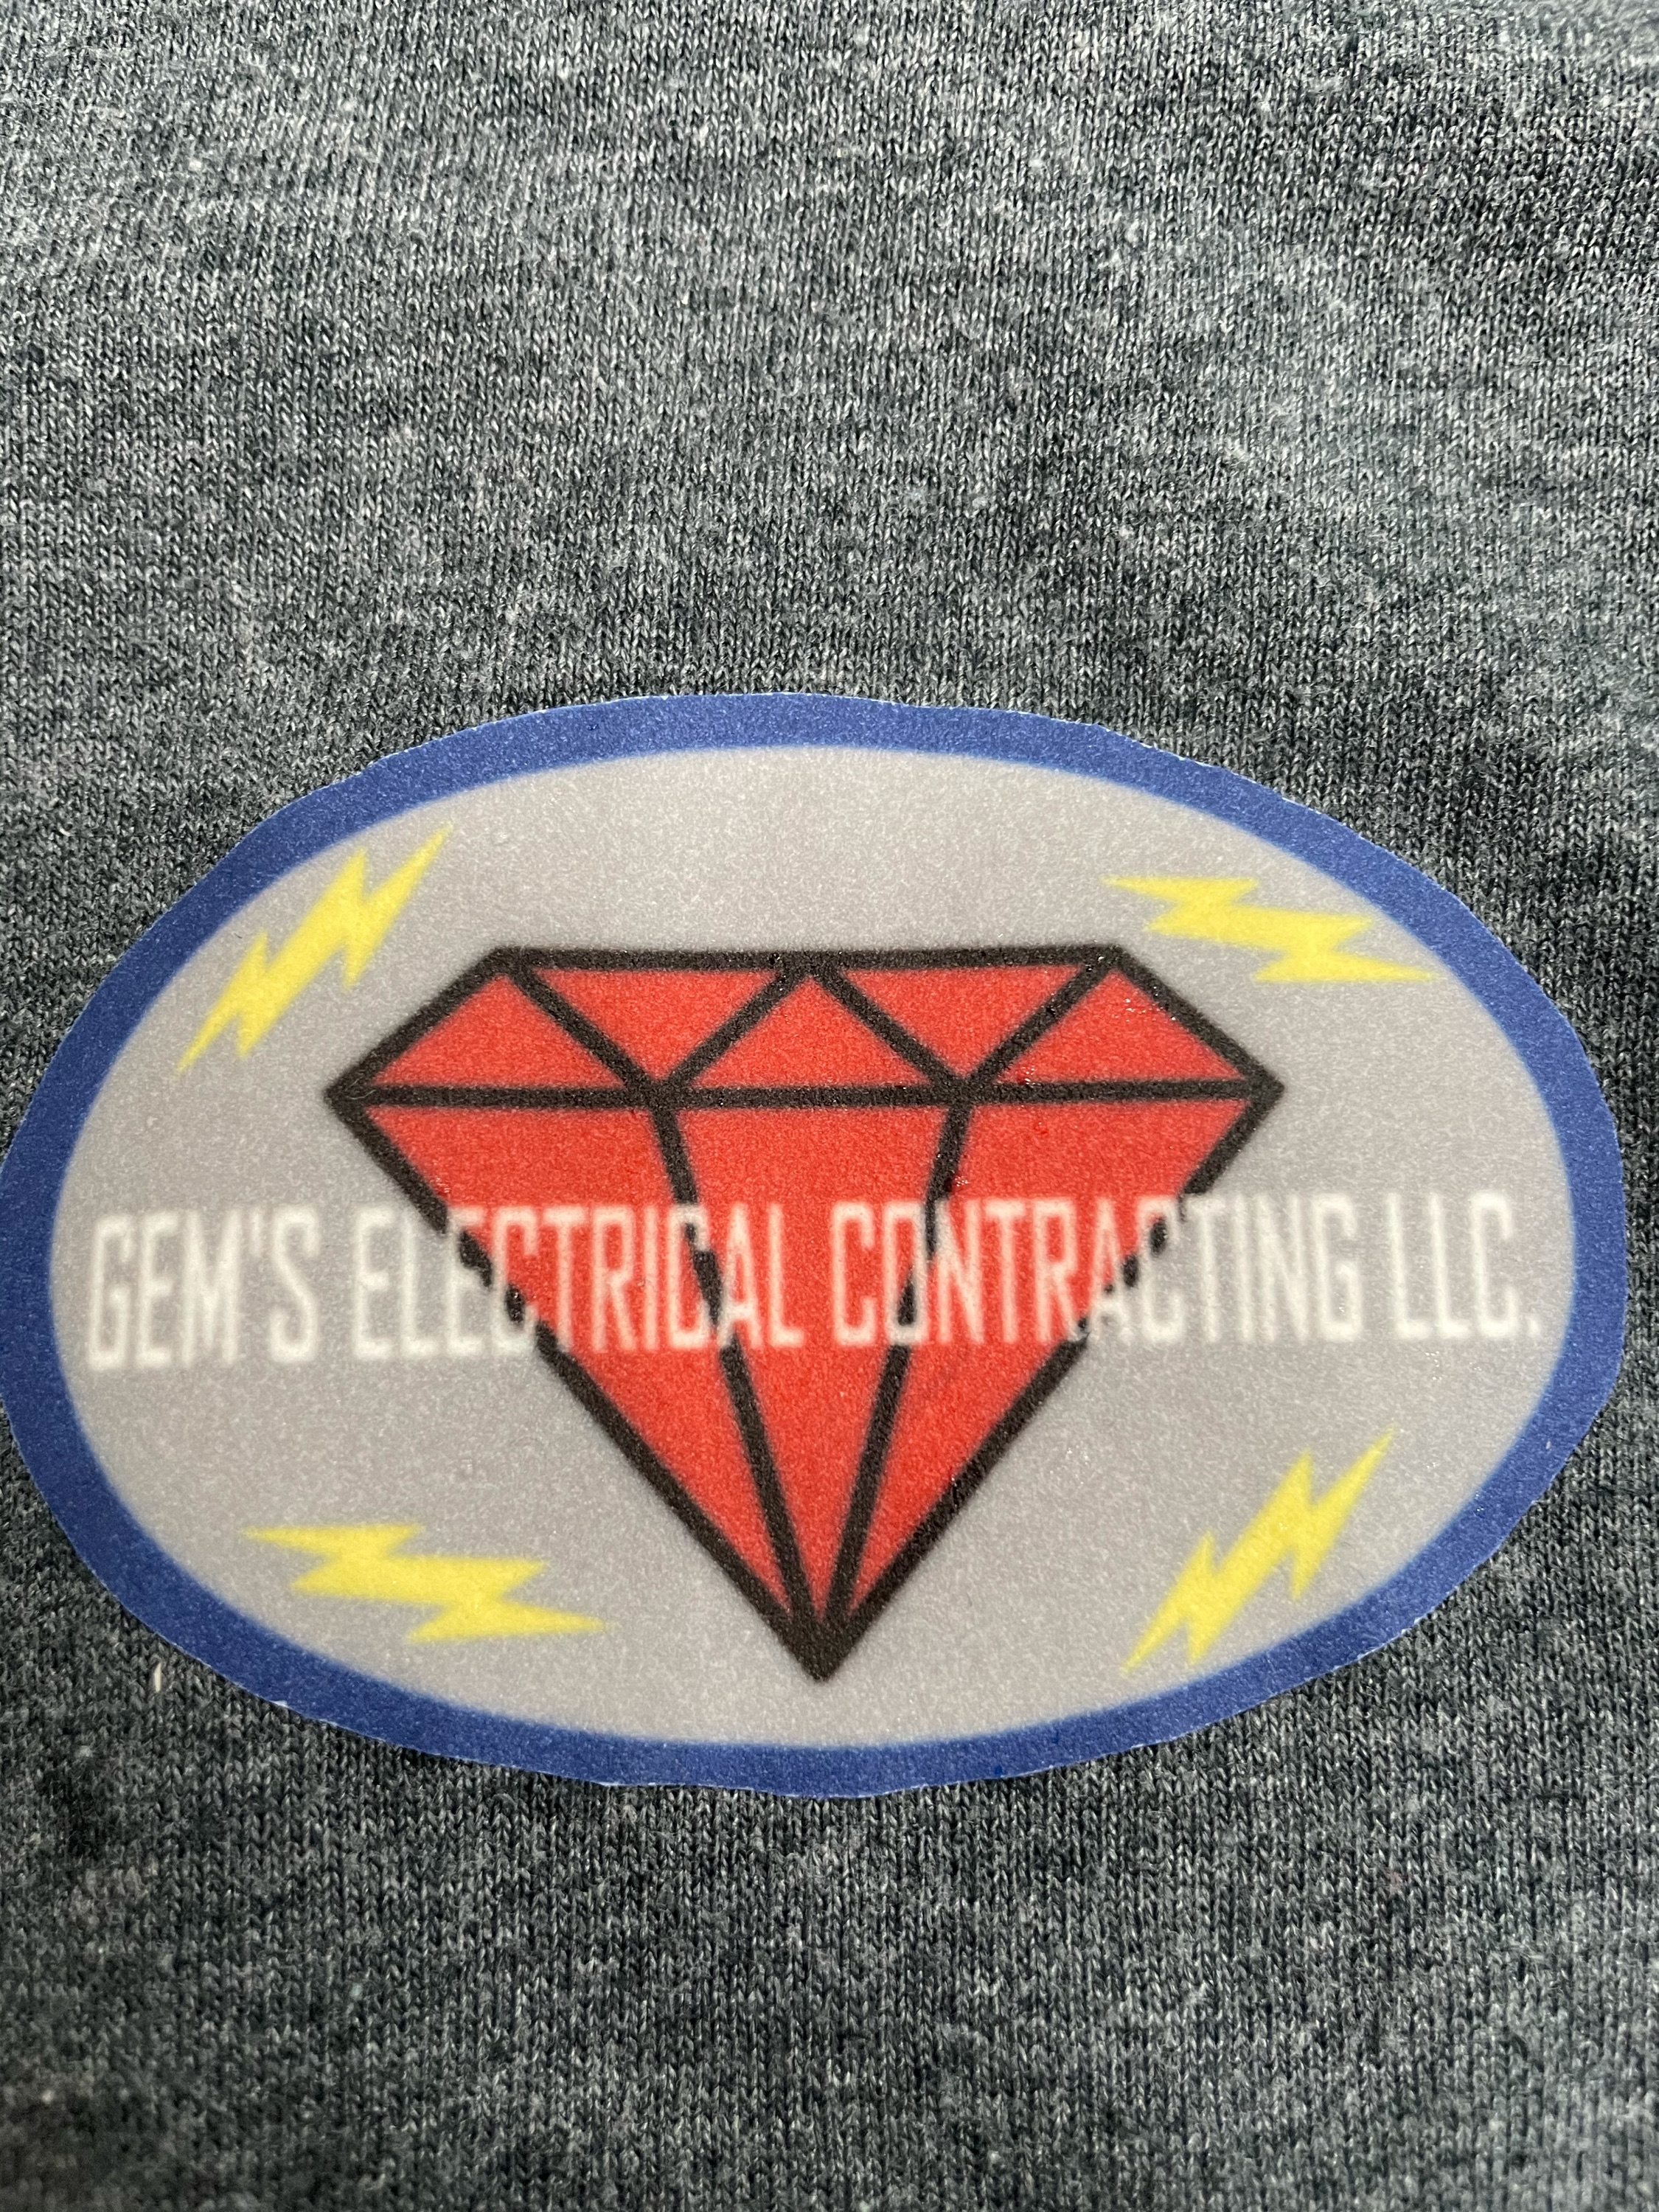 Frank the Electrician Logo